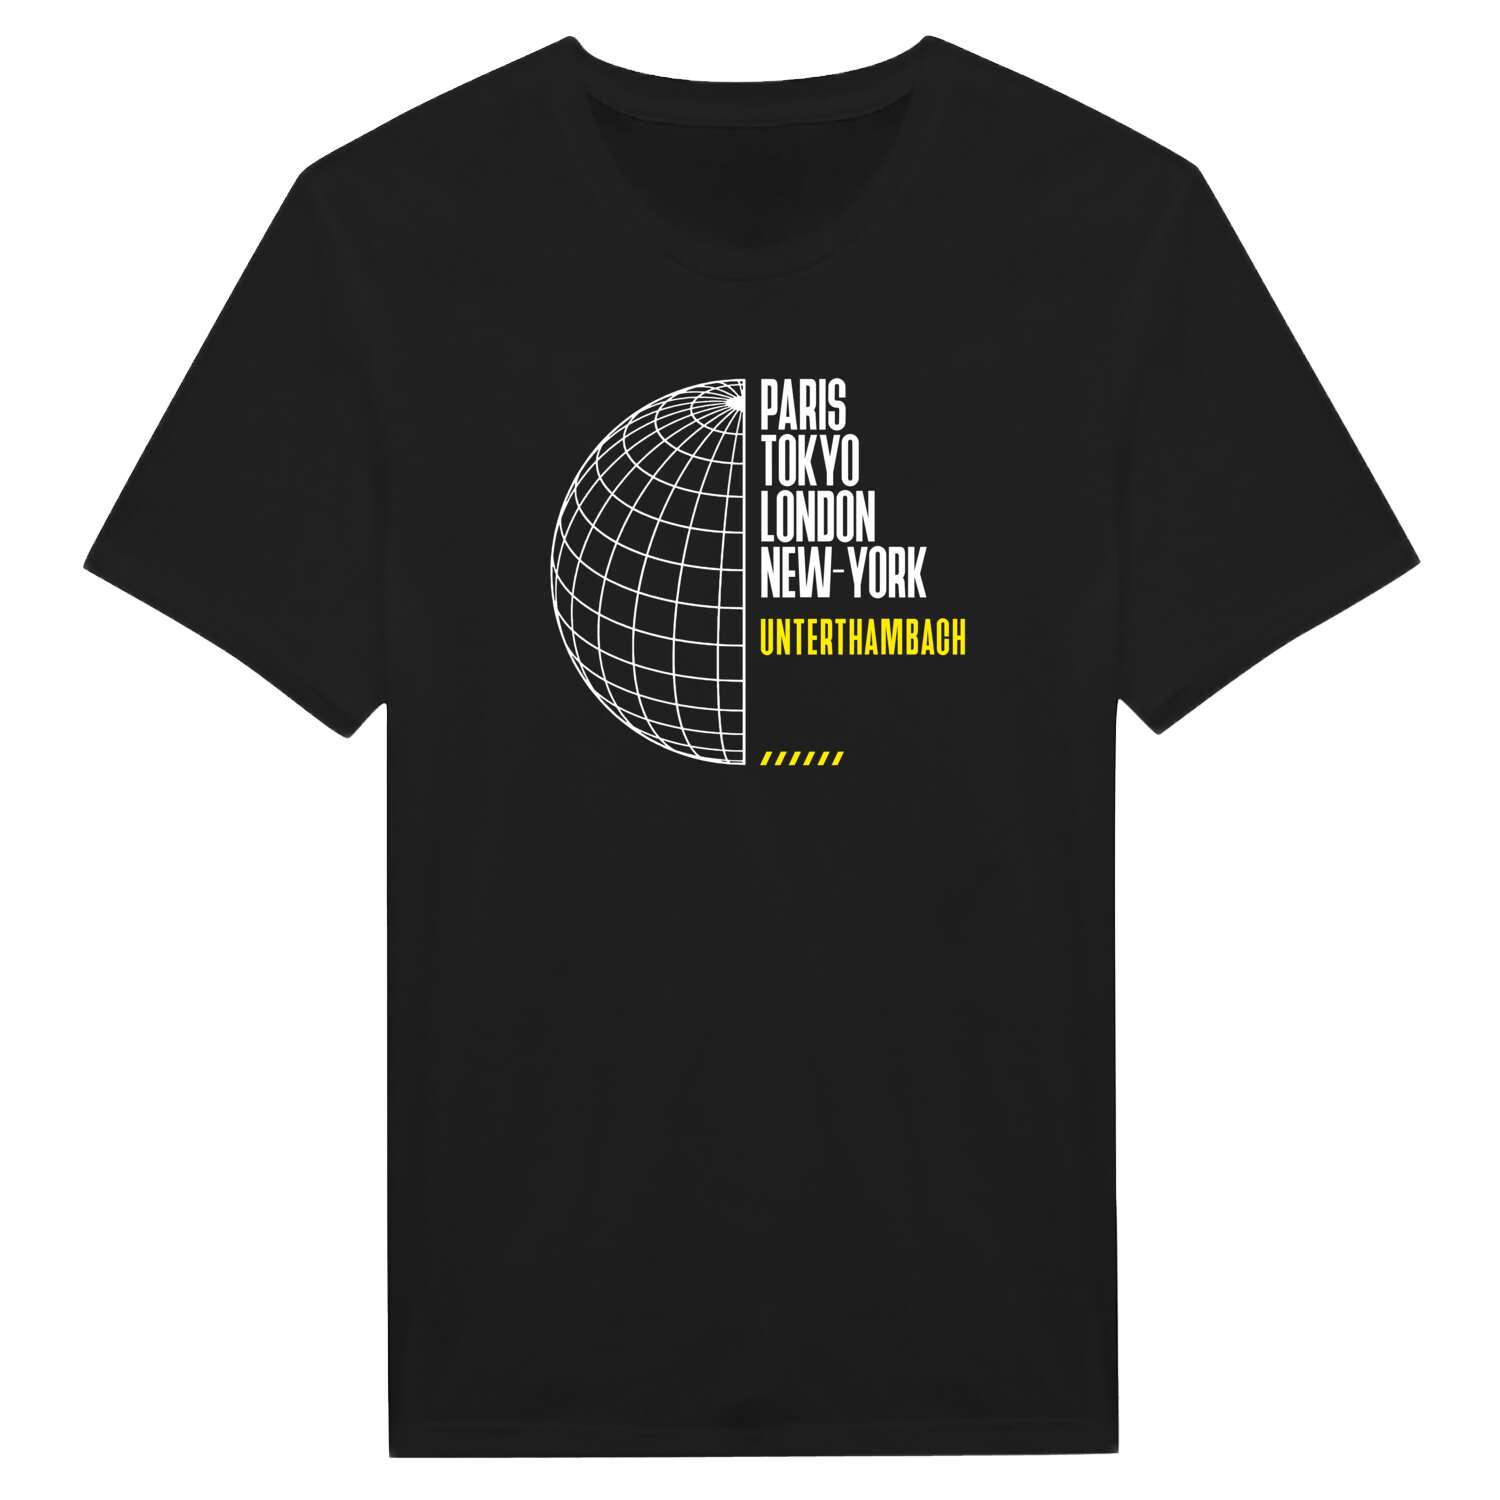 Unterthambach T-Shirt »Paris Tokyo London«